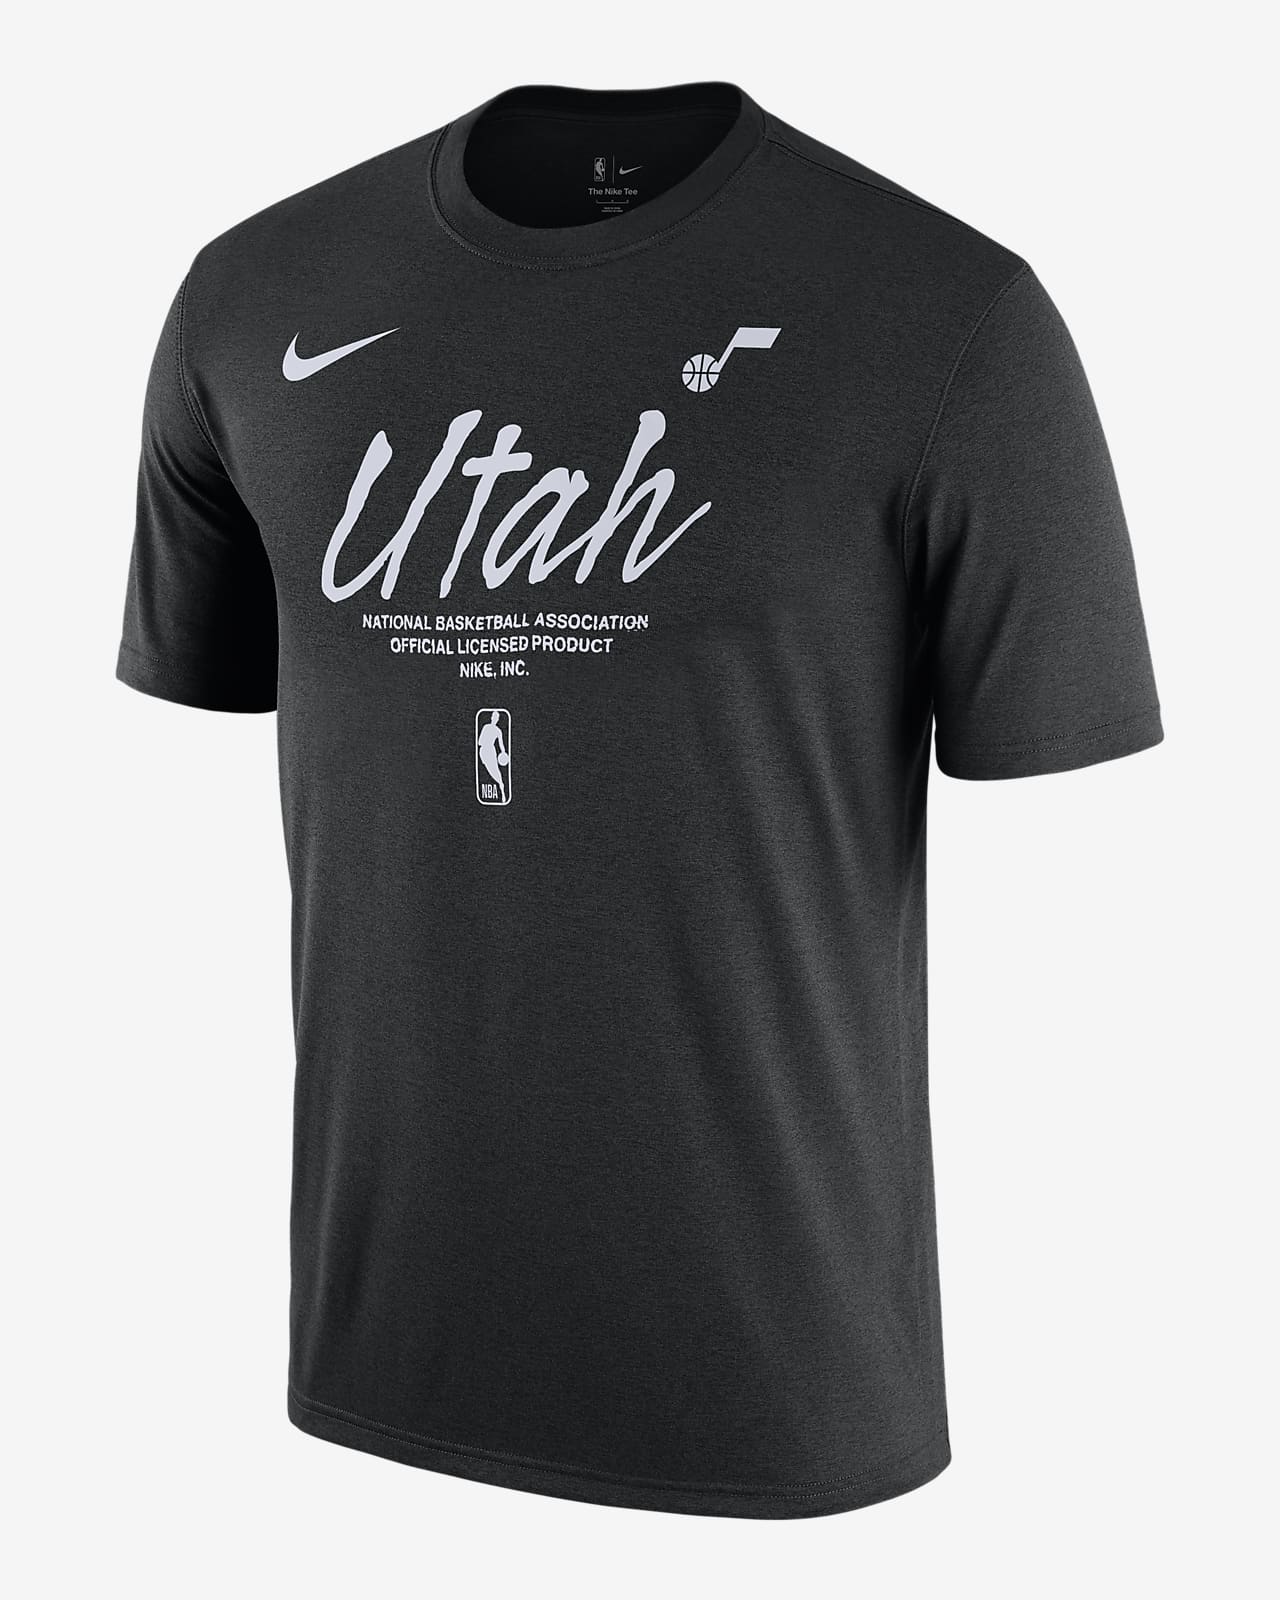 Playera Nike de la NBA para hombre Utah Jazz Essential